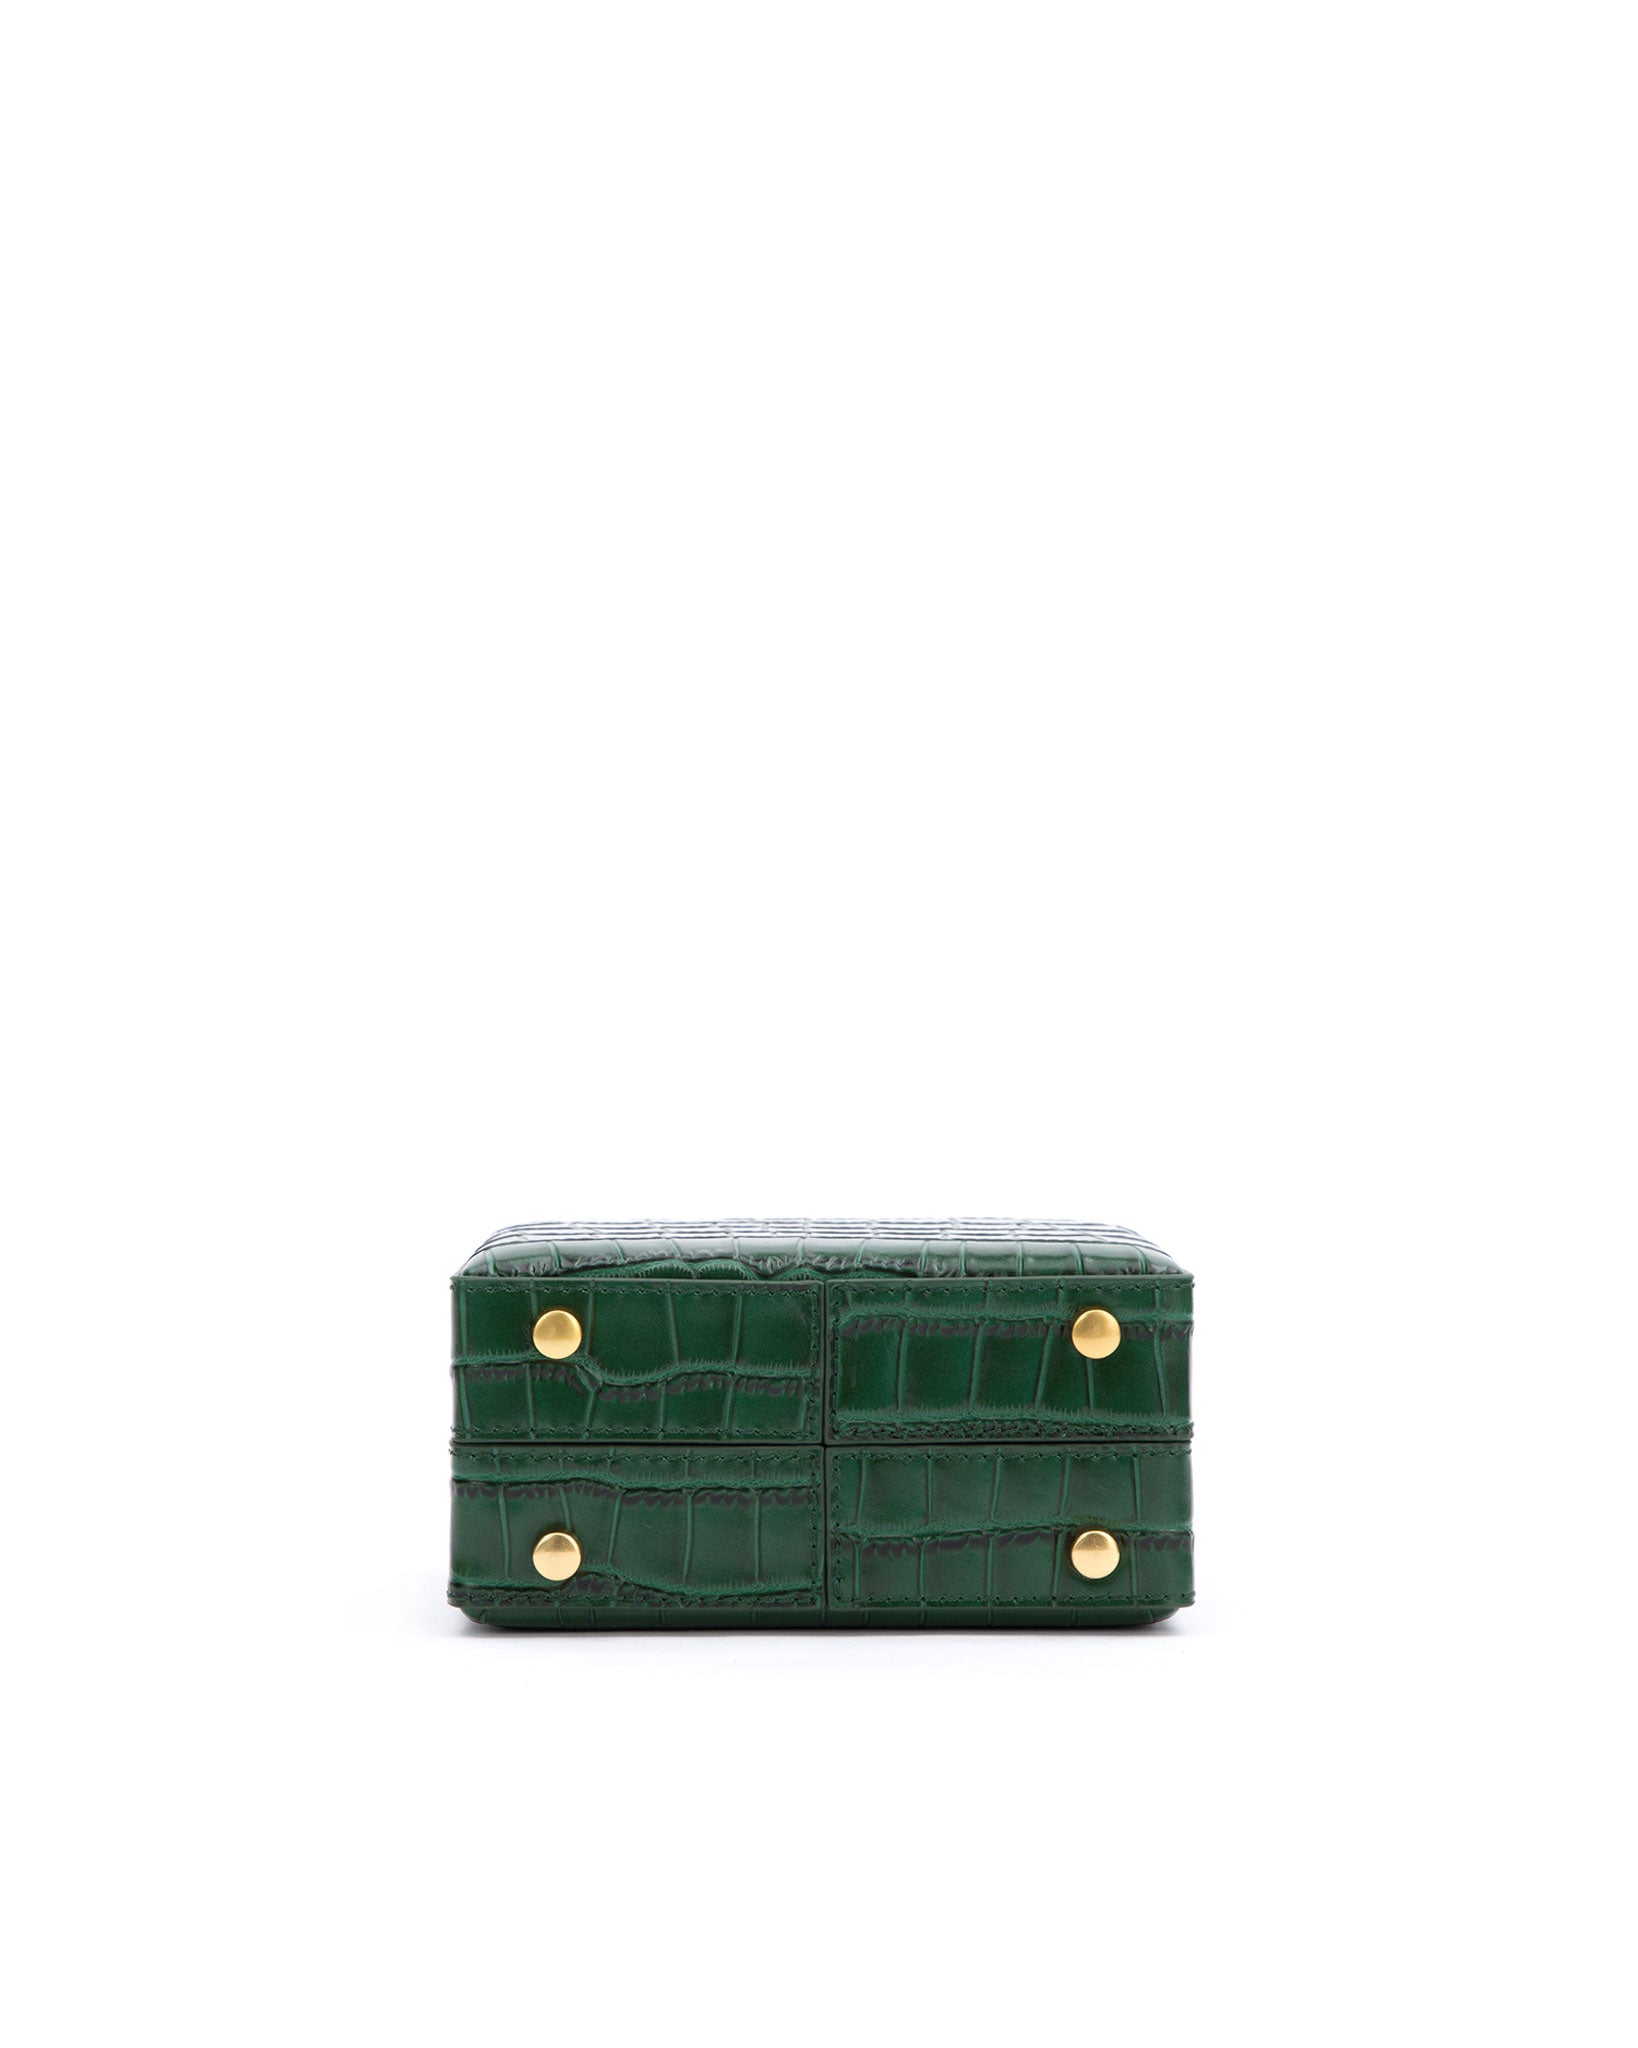 Brandon Blackwood New York - Mini Kendrick Trunk - Forest Green Croc Embossed Leather w/ Brass Hardware